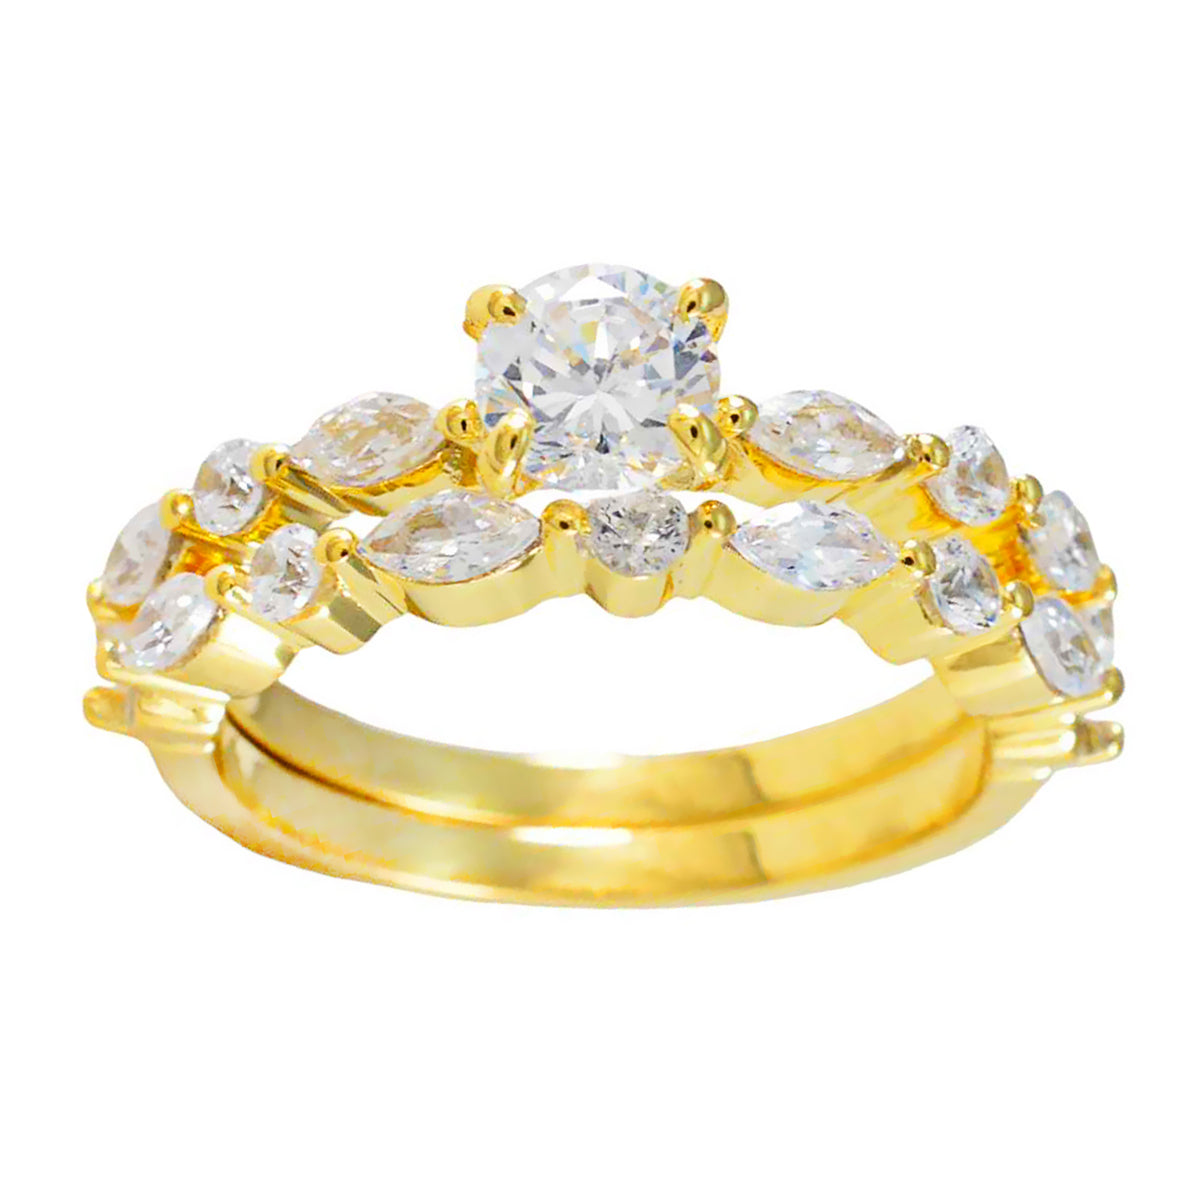 Anillo de plata raro riyo con anillo con engaste de puntas de múltiples formas de piedra cz blanca chapado en oro amarillo